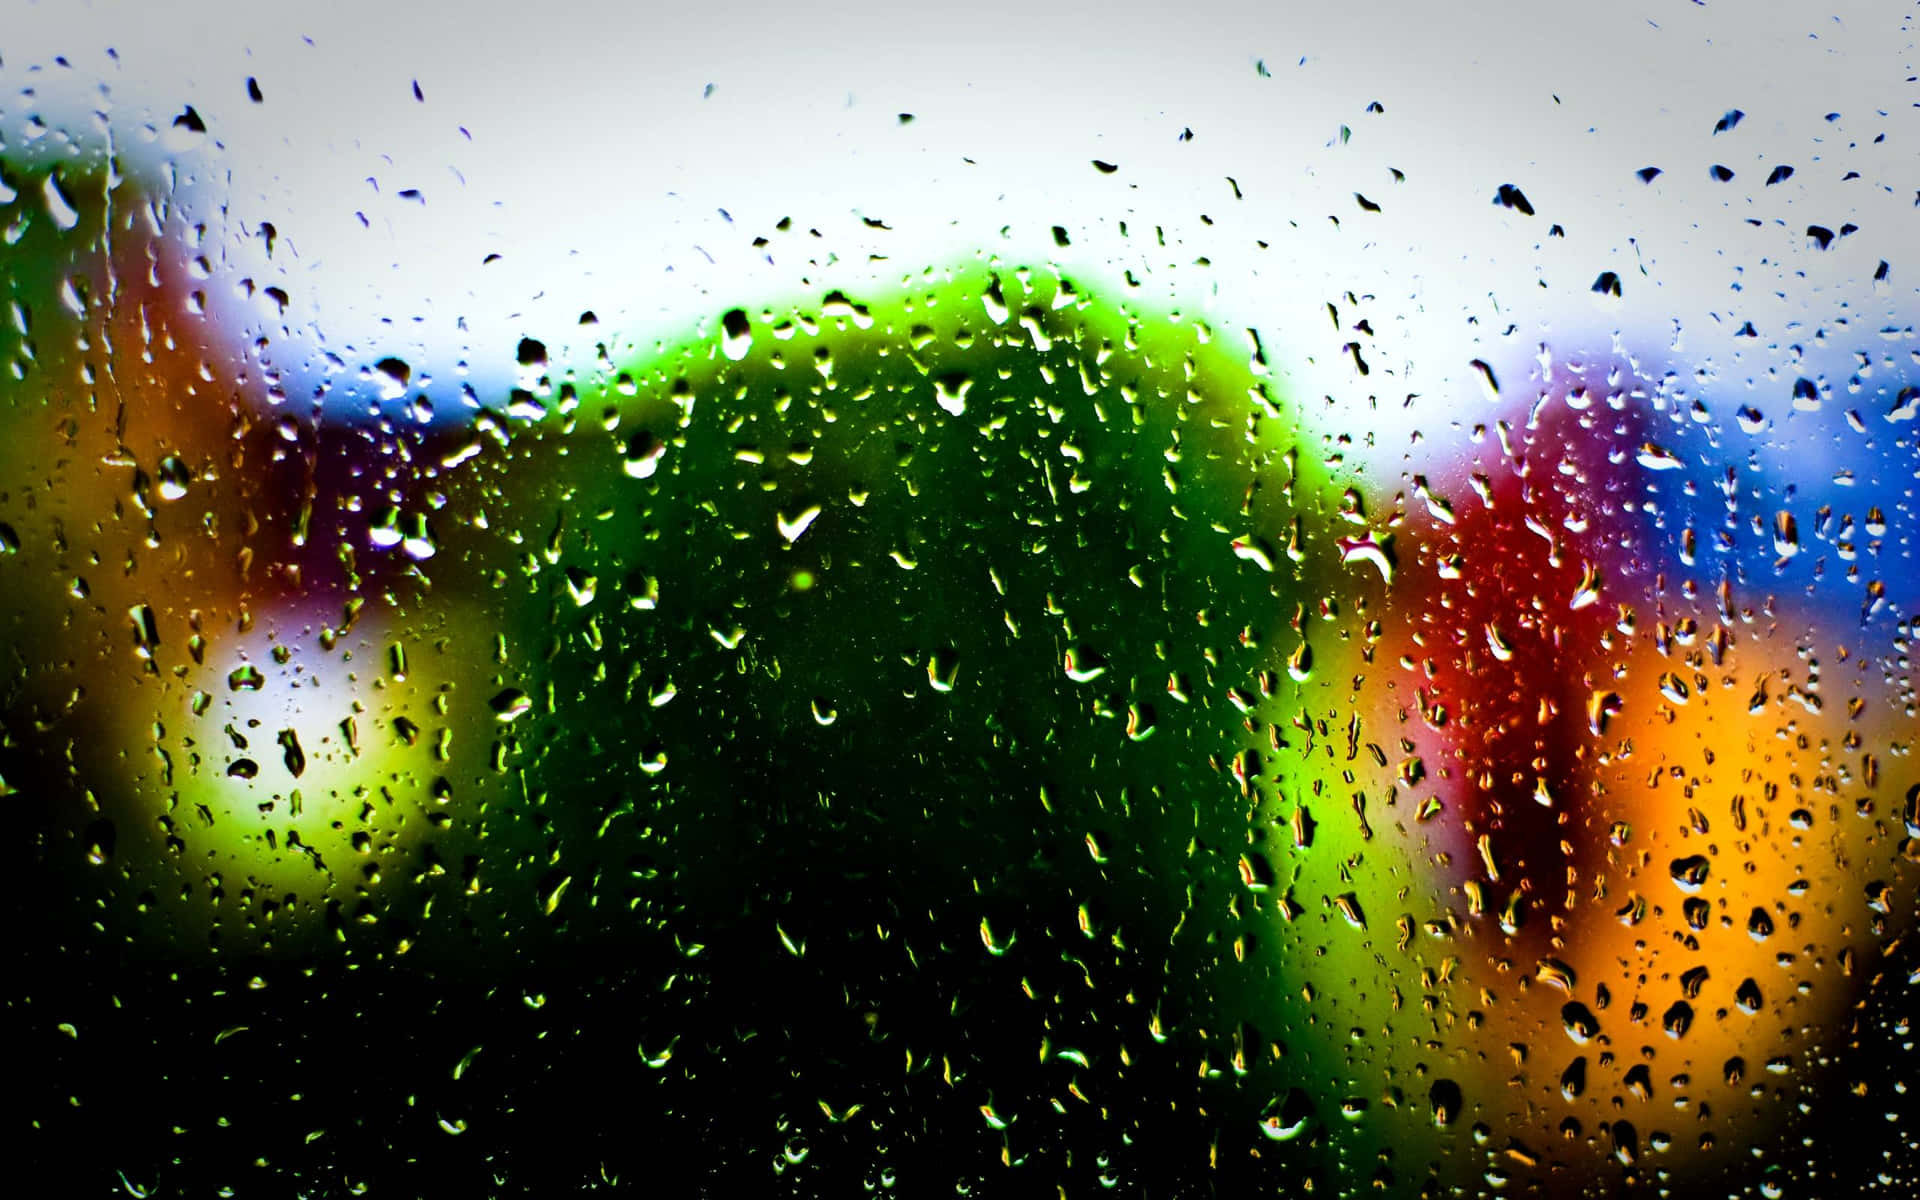 Freshness&Clarity - Rain Drops